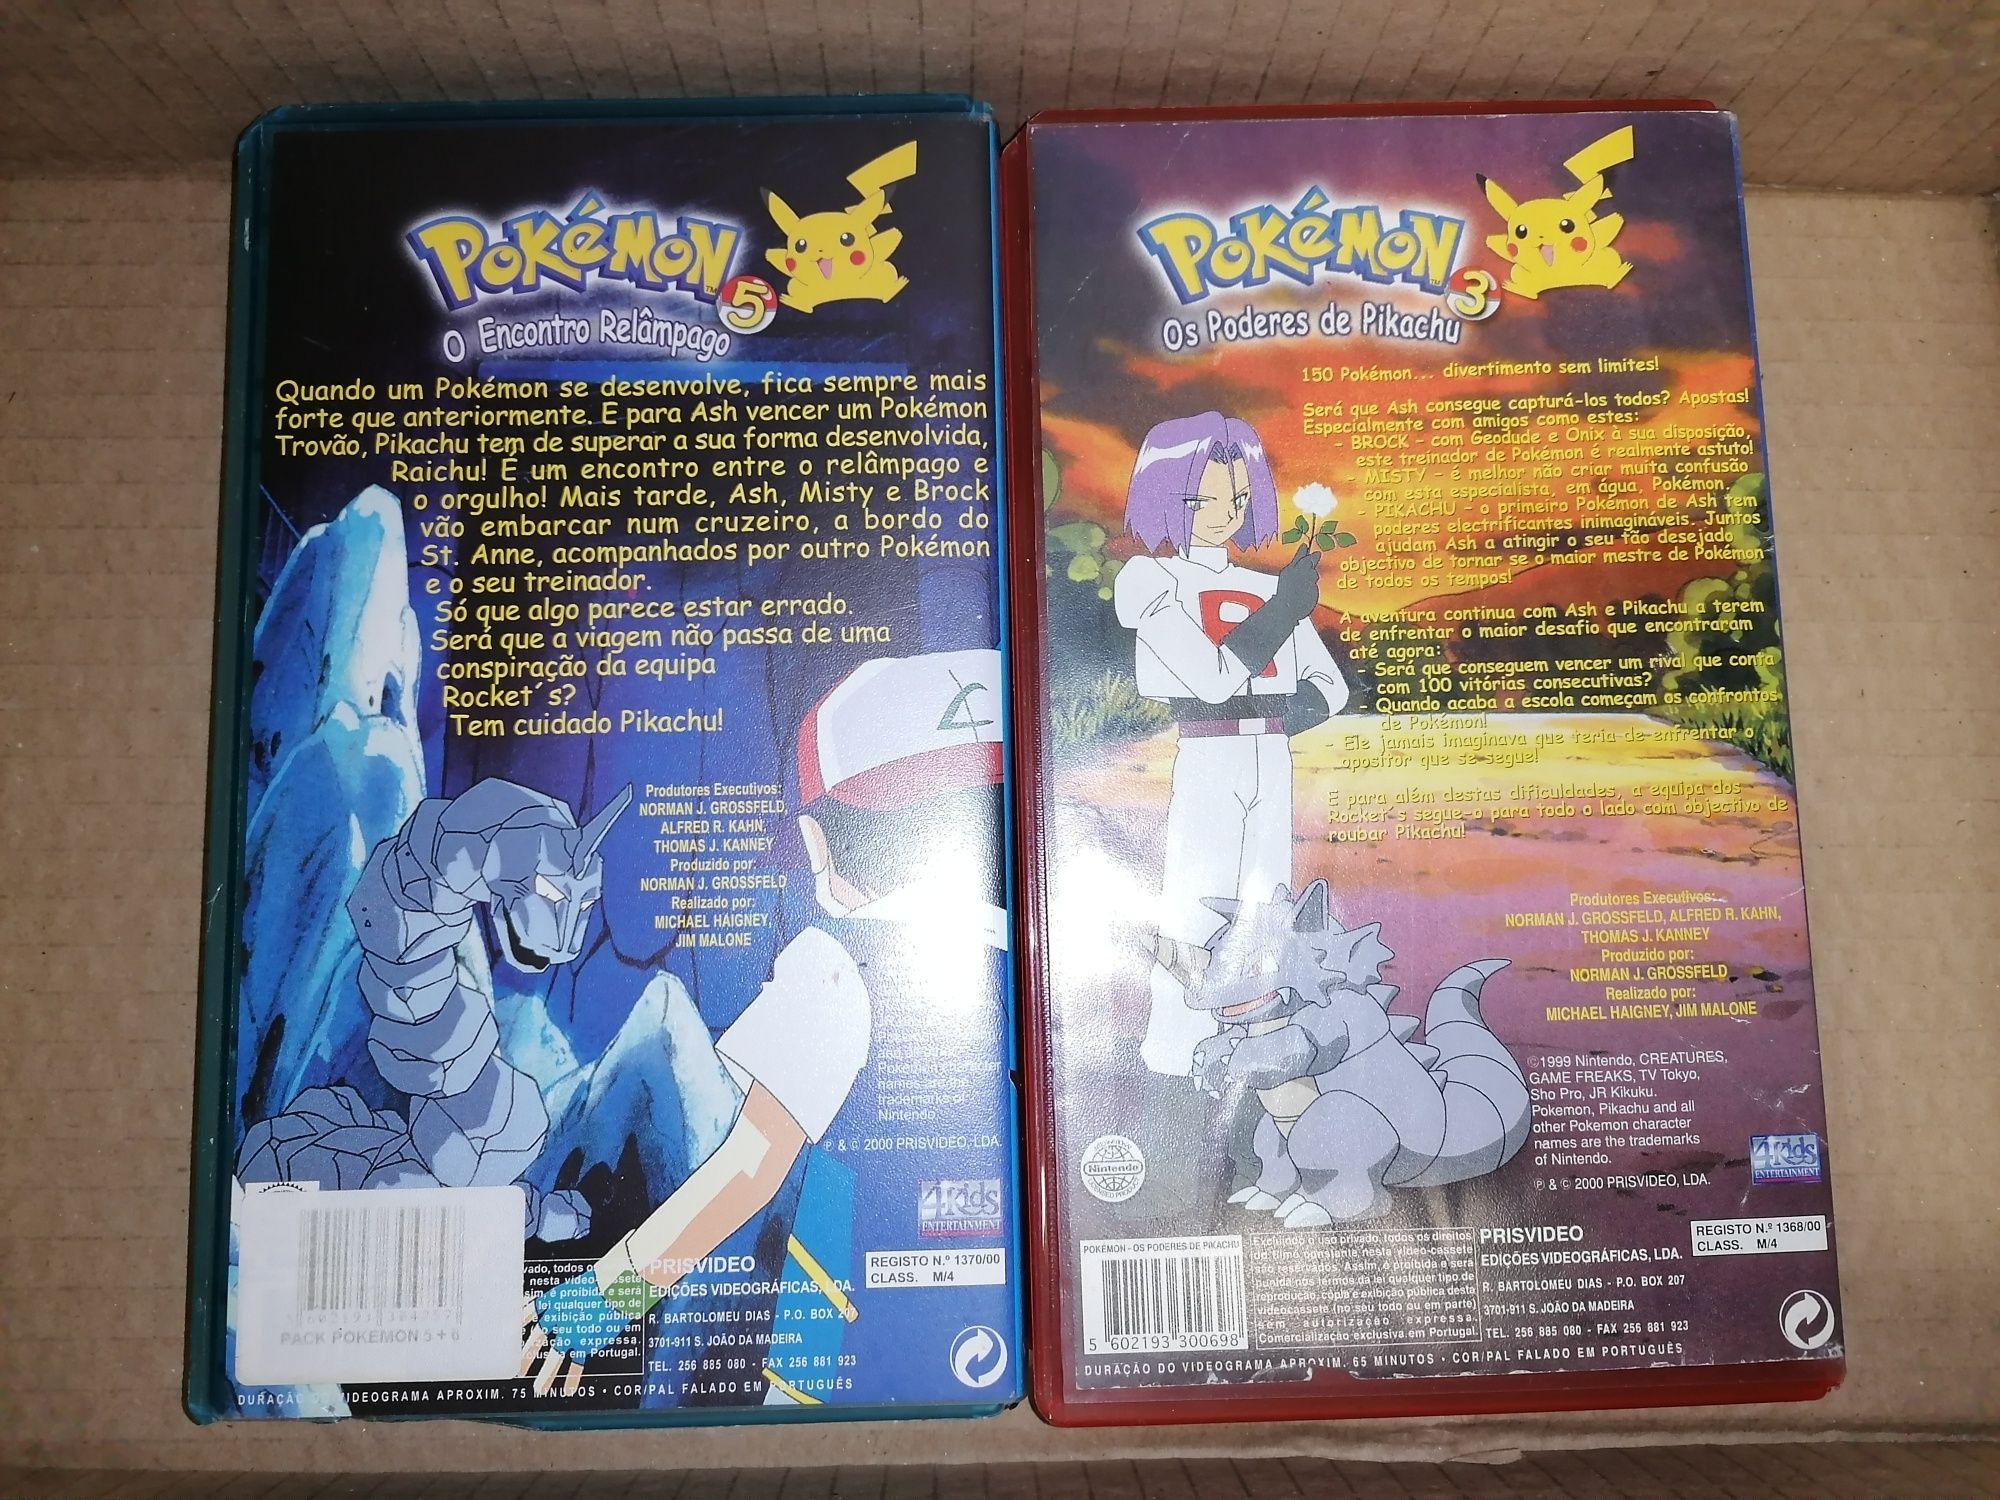 VHS Pokémon (volume 3 e 5)